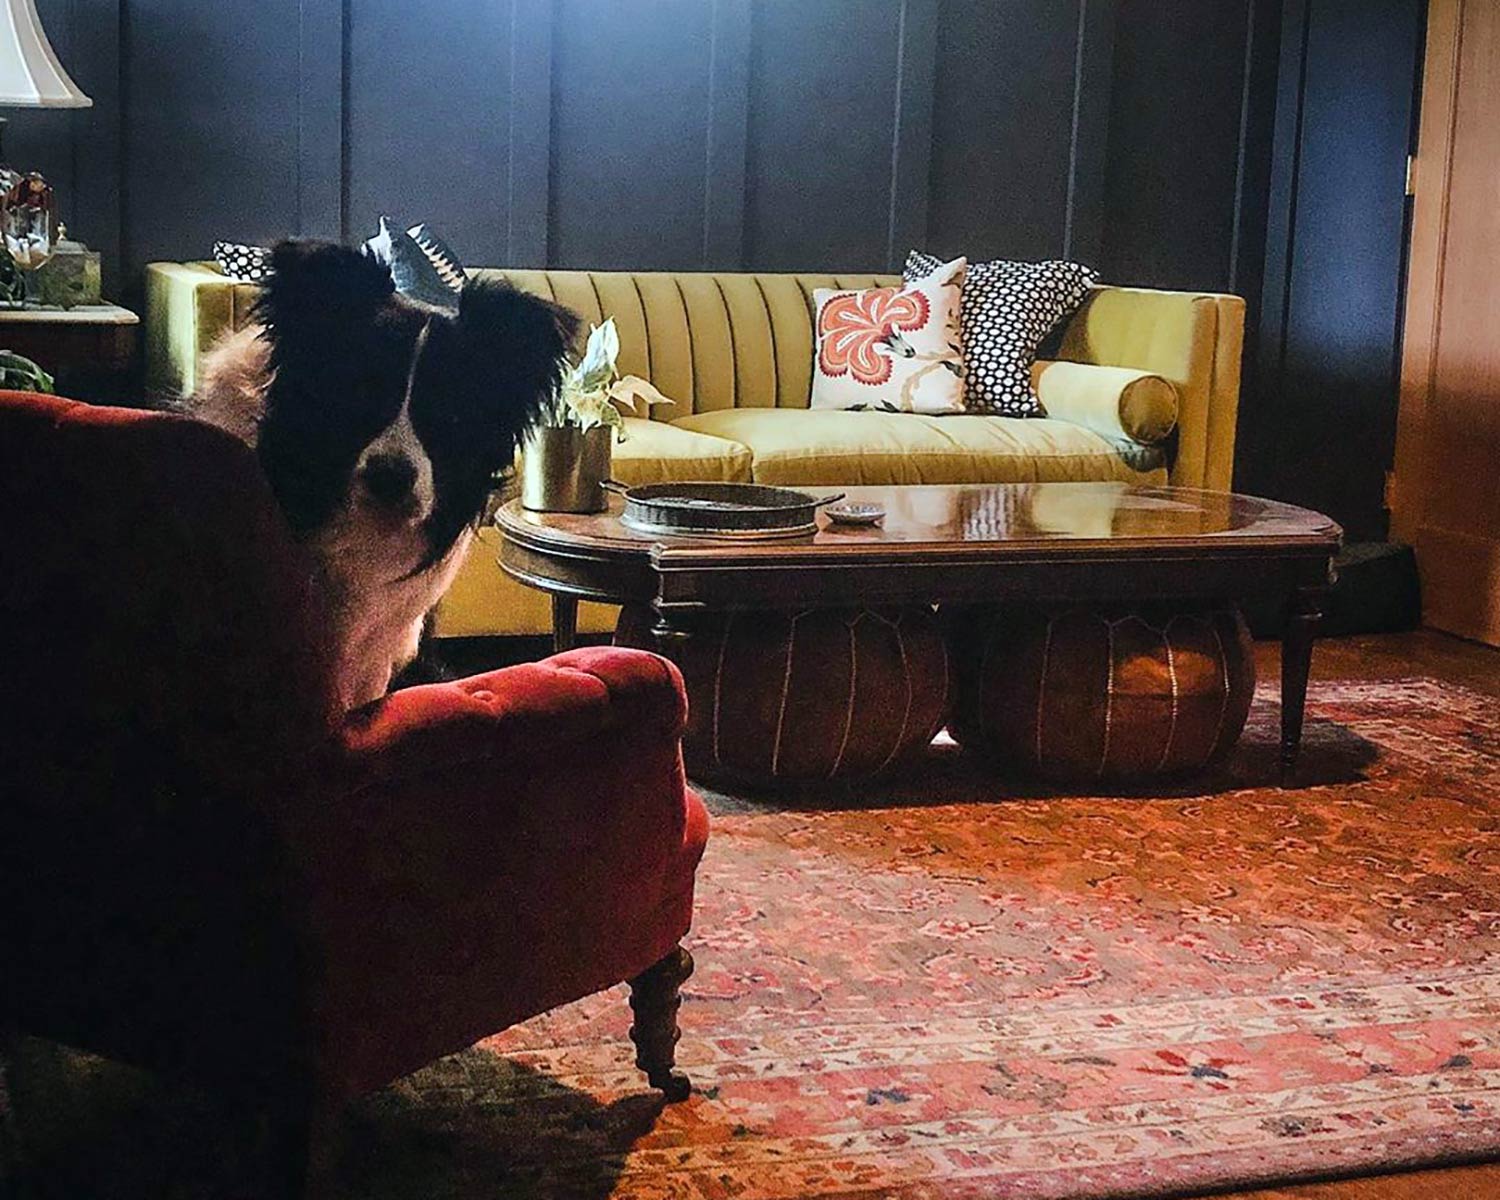 Harley sofa and a curious Gus